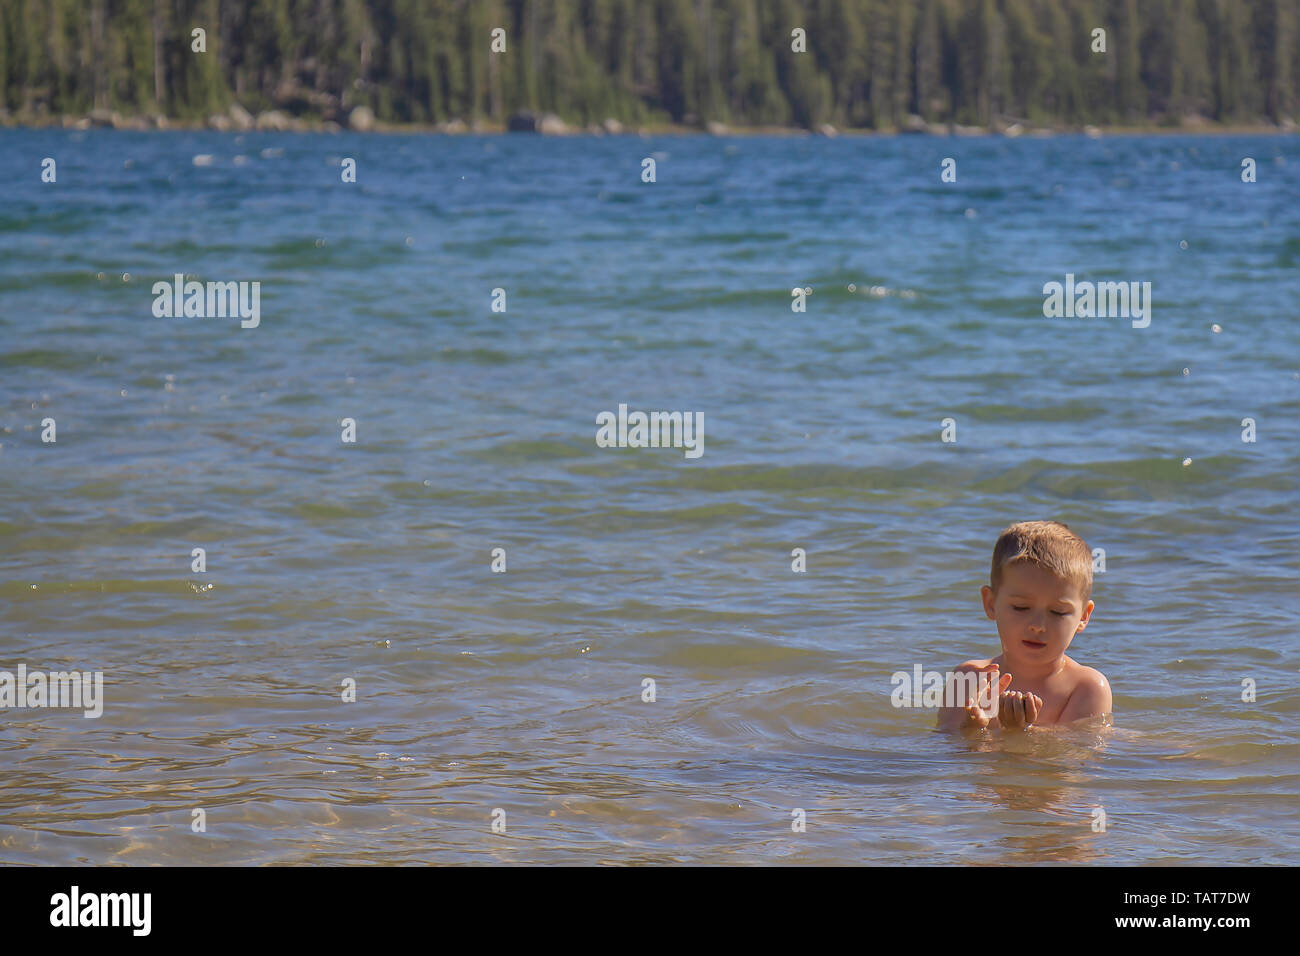 A young boy swims in Tenaya Lake, Yosemite National Park, California, USA. Stock Photo